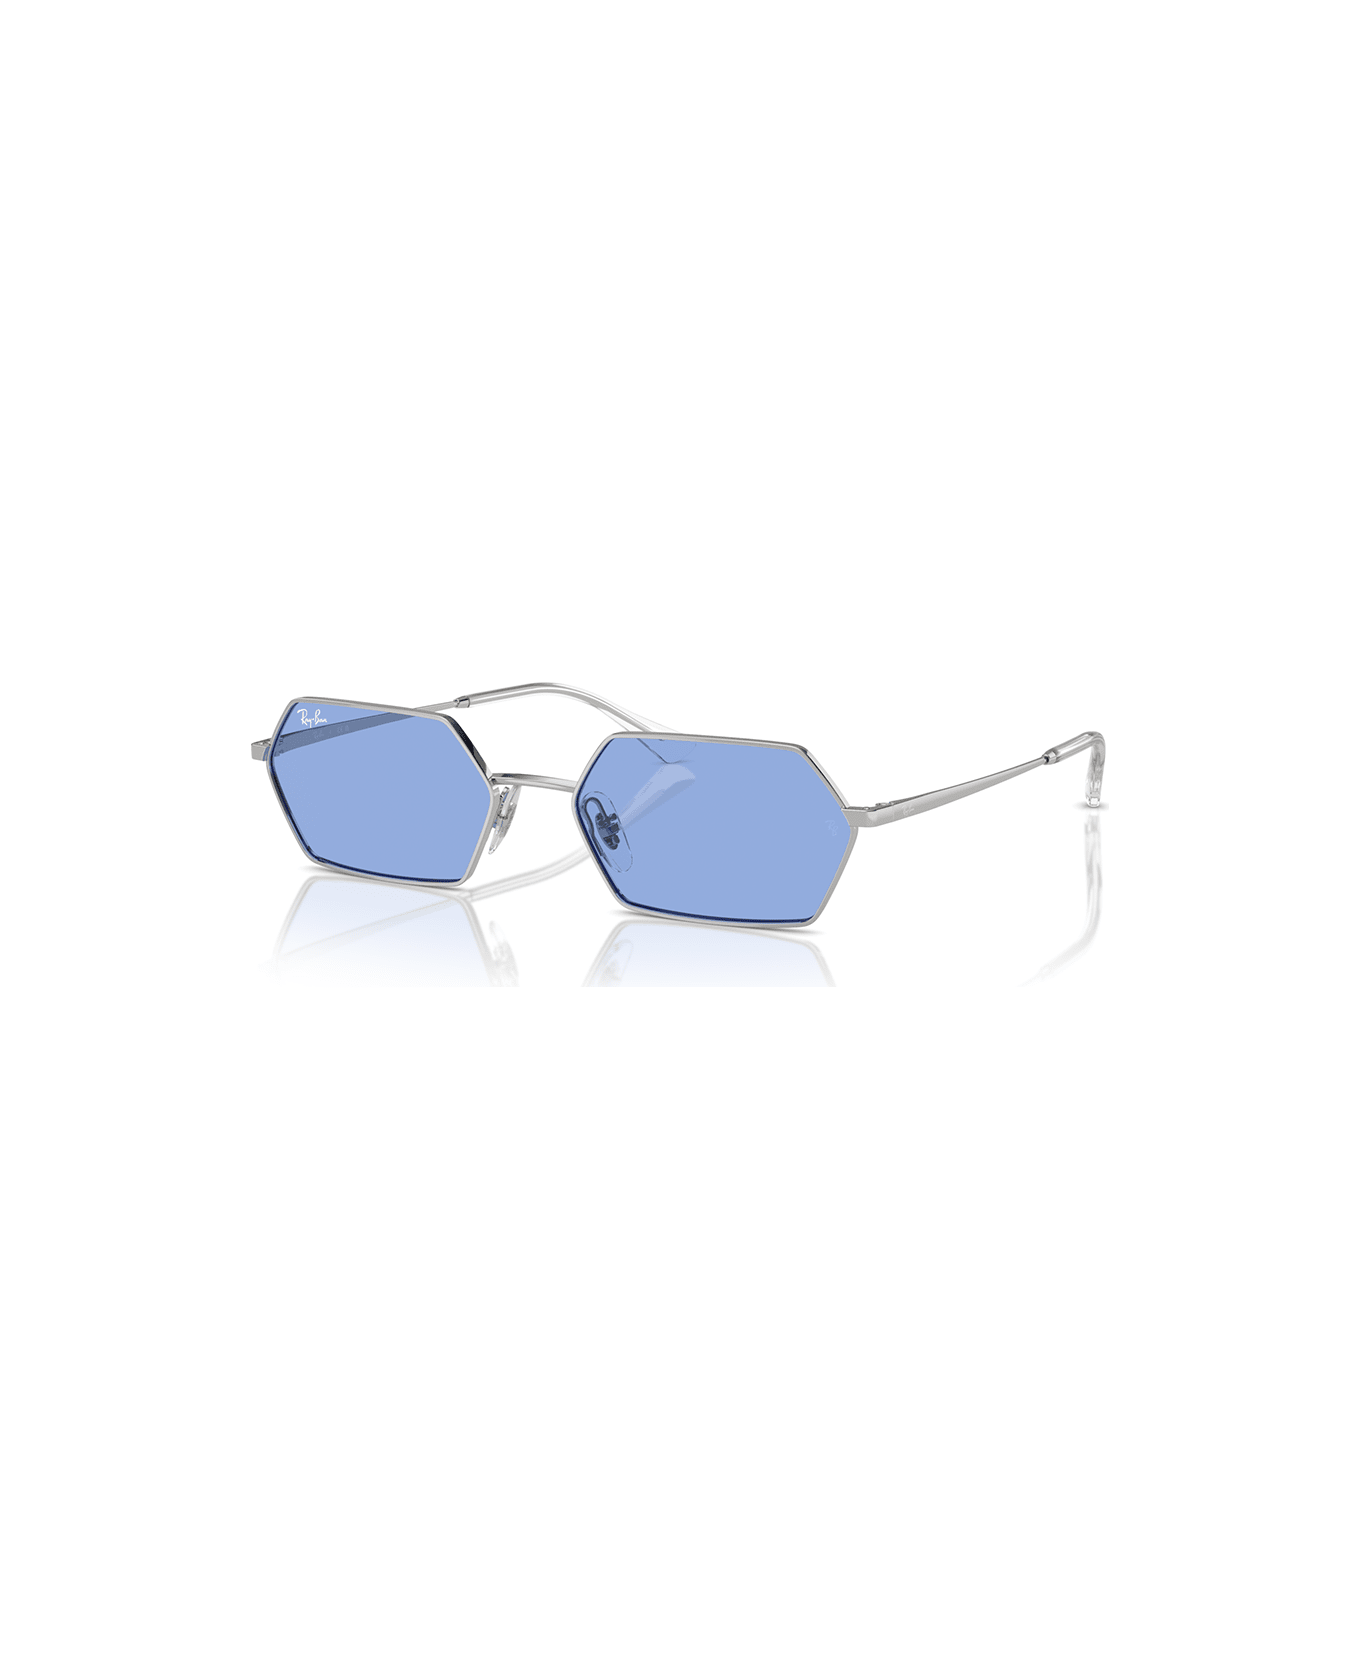 Ray-Ban Sunglasses - Silver/Blu